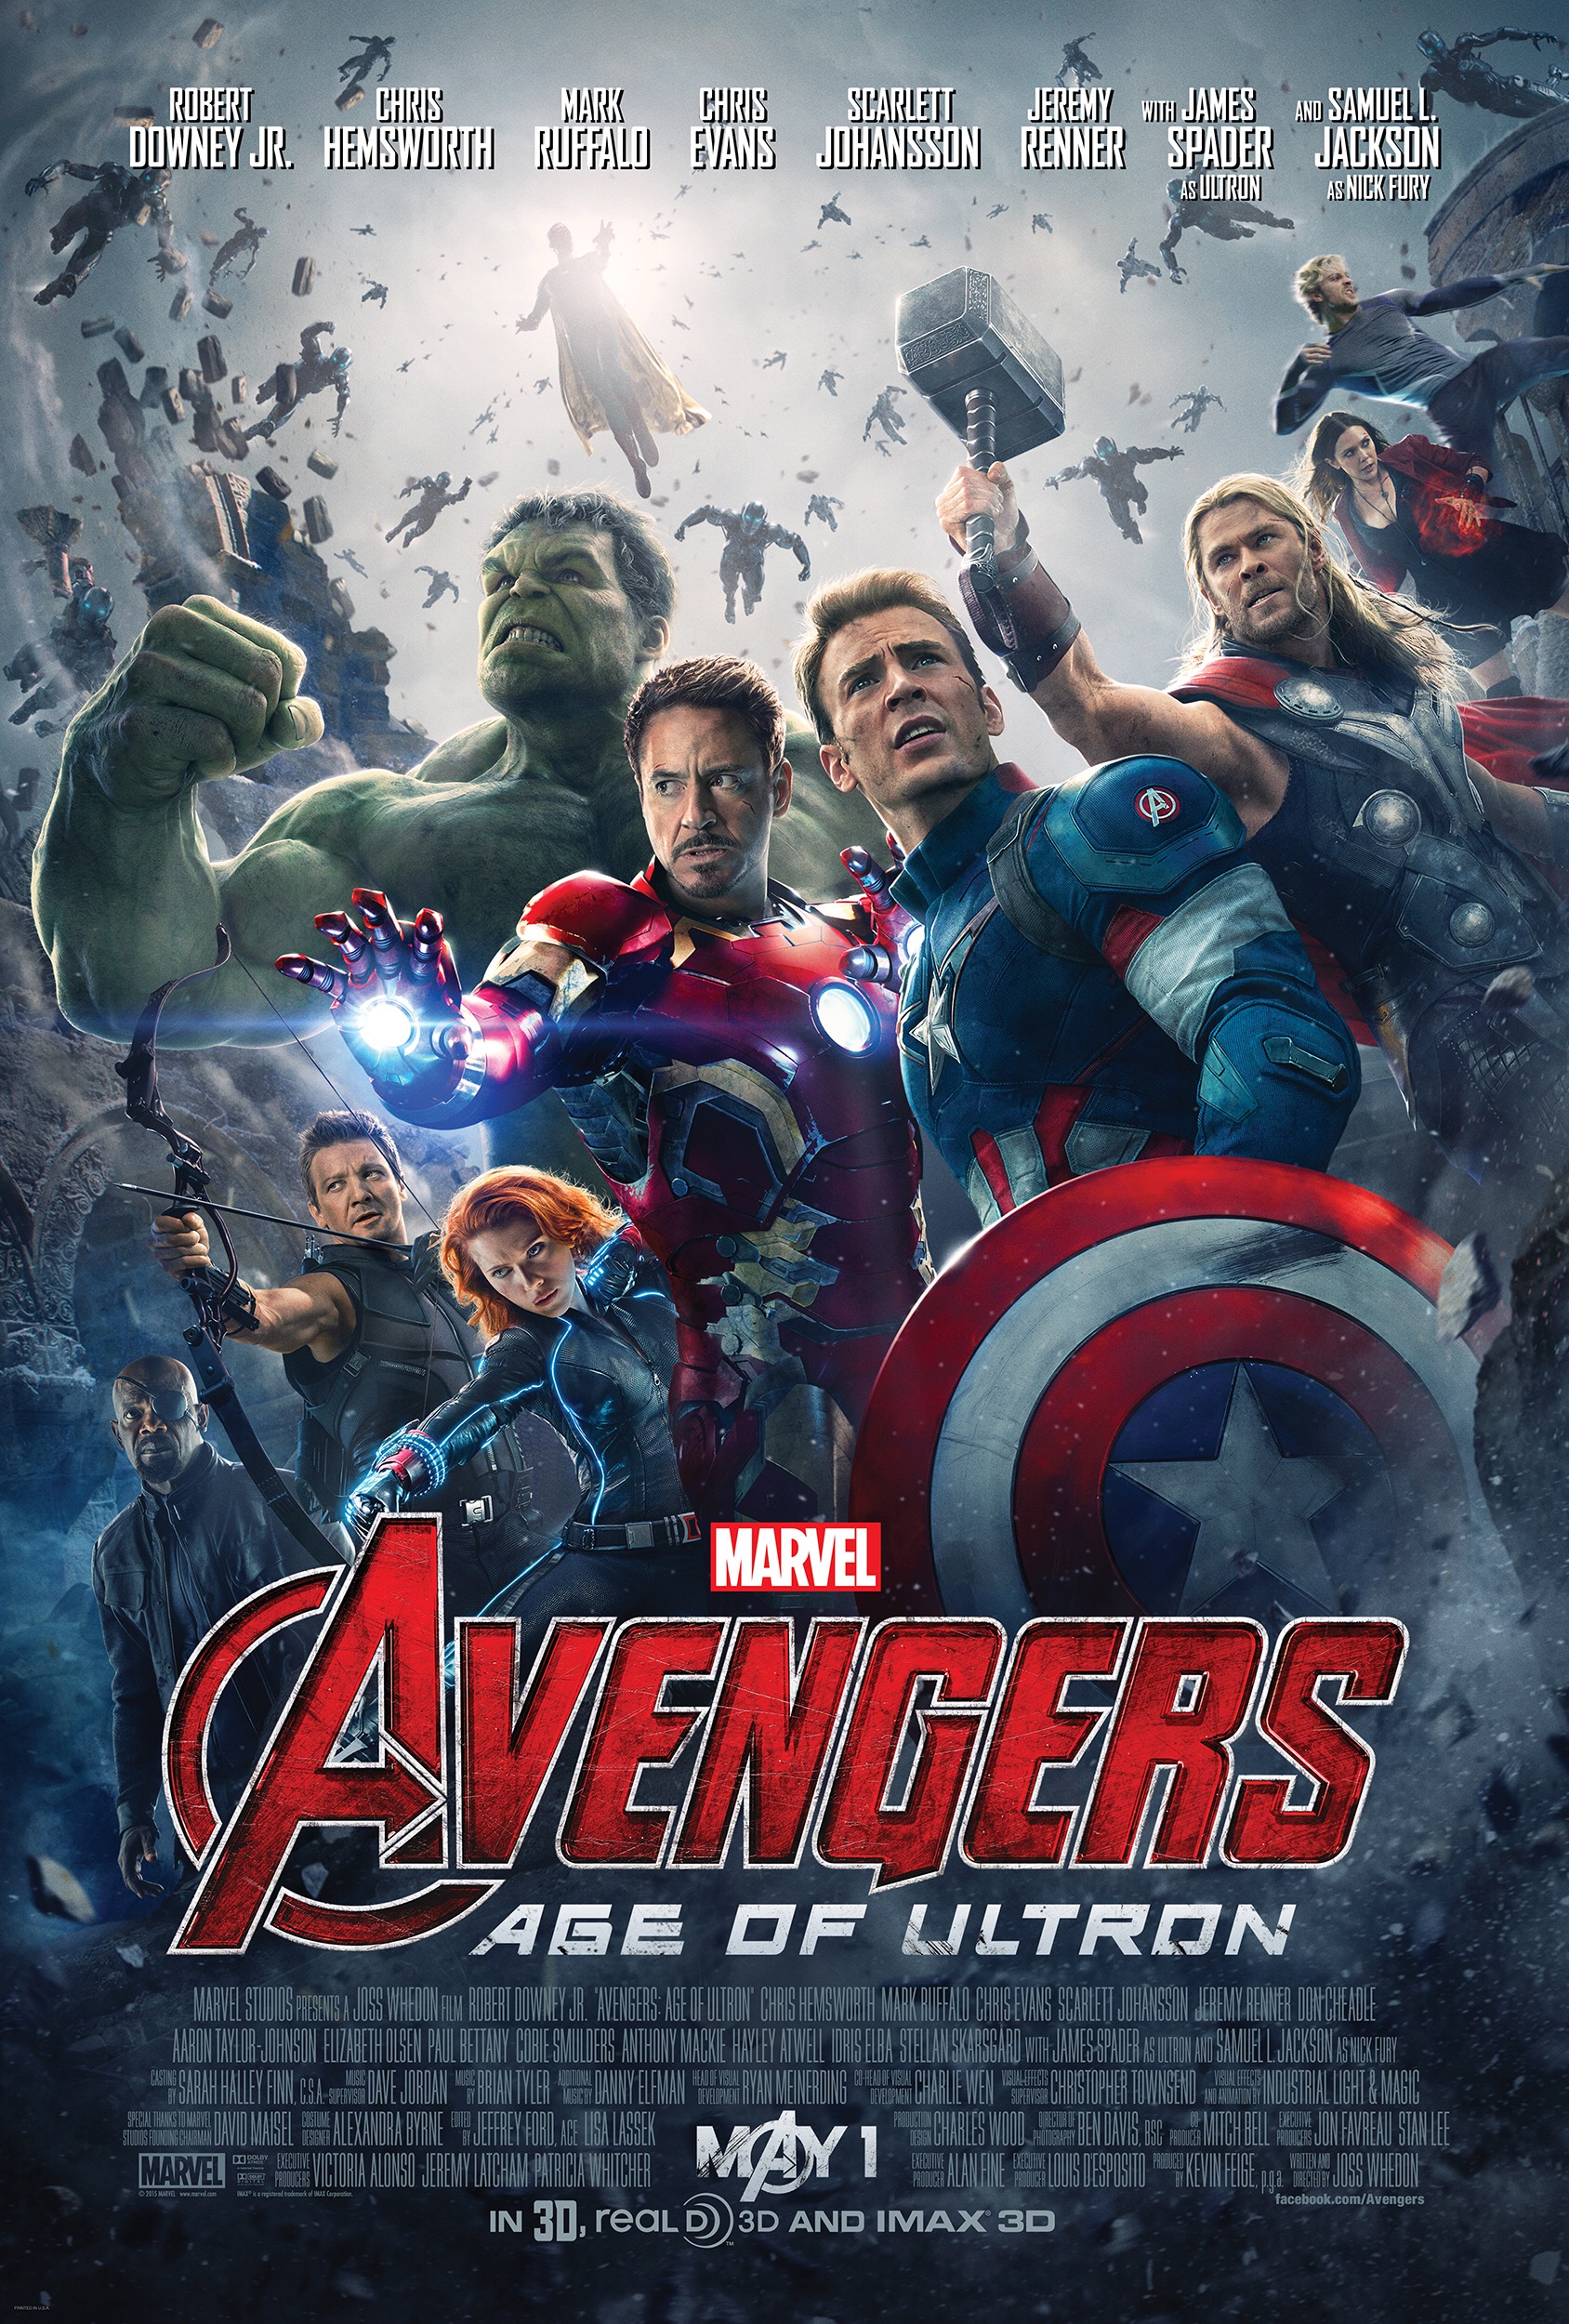 A spoiler-free Avengers: Endgame review